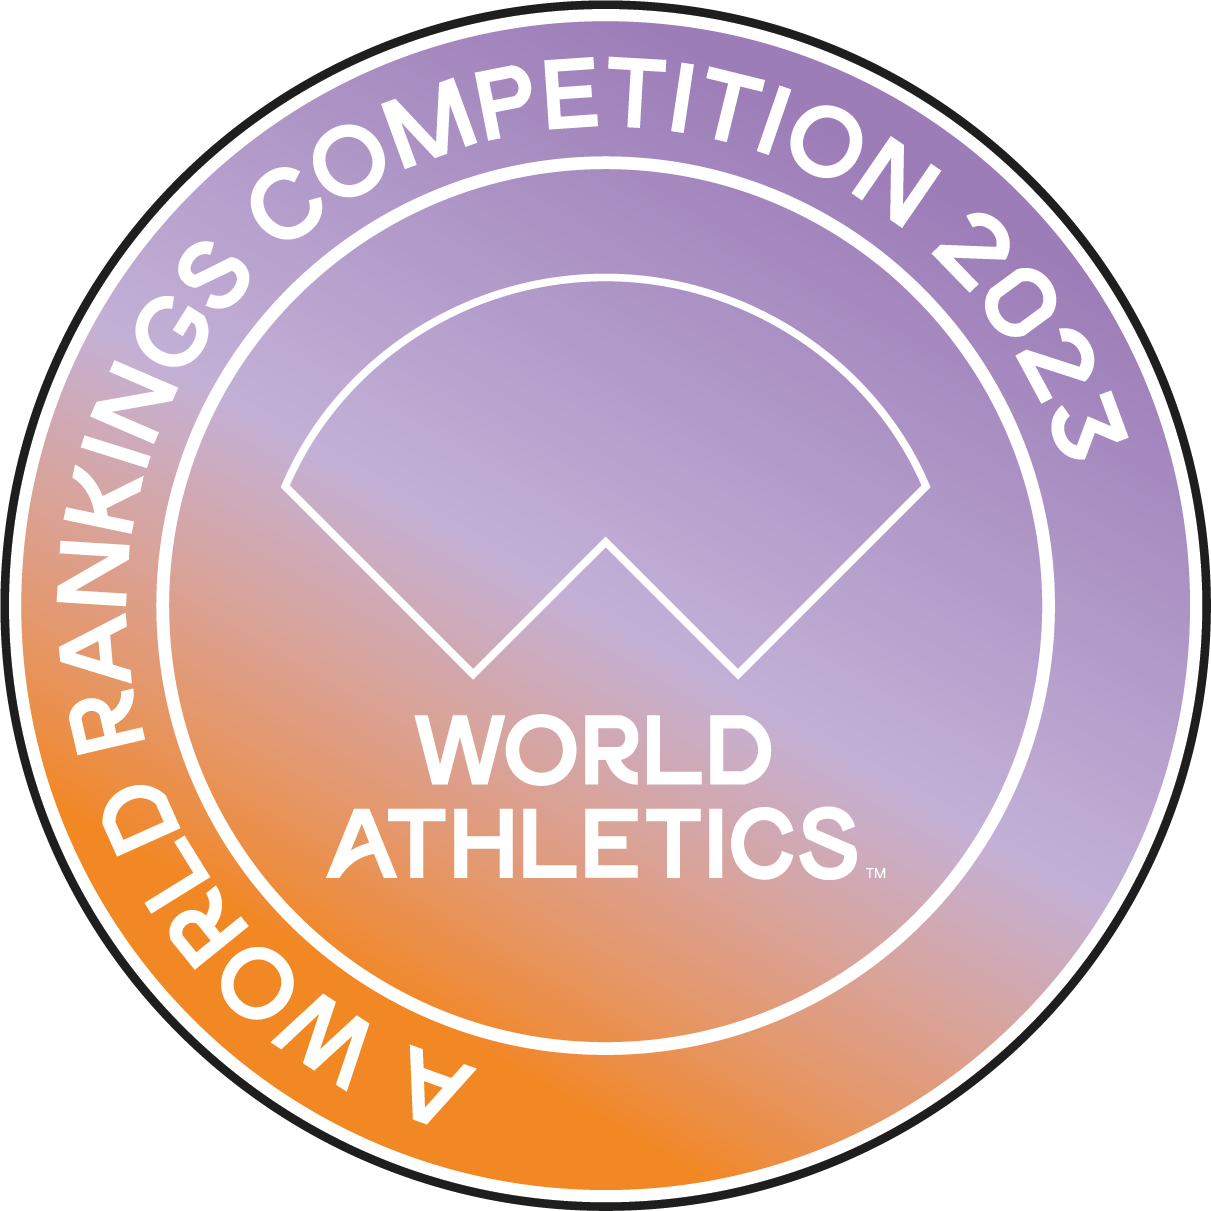  Inscrit au ranking World Athletics 